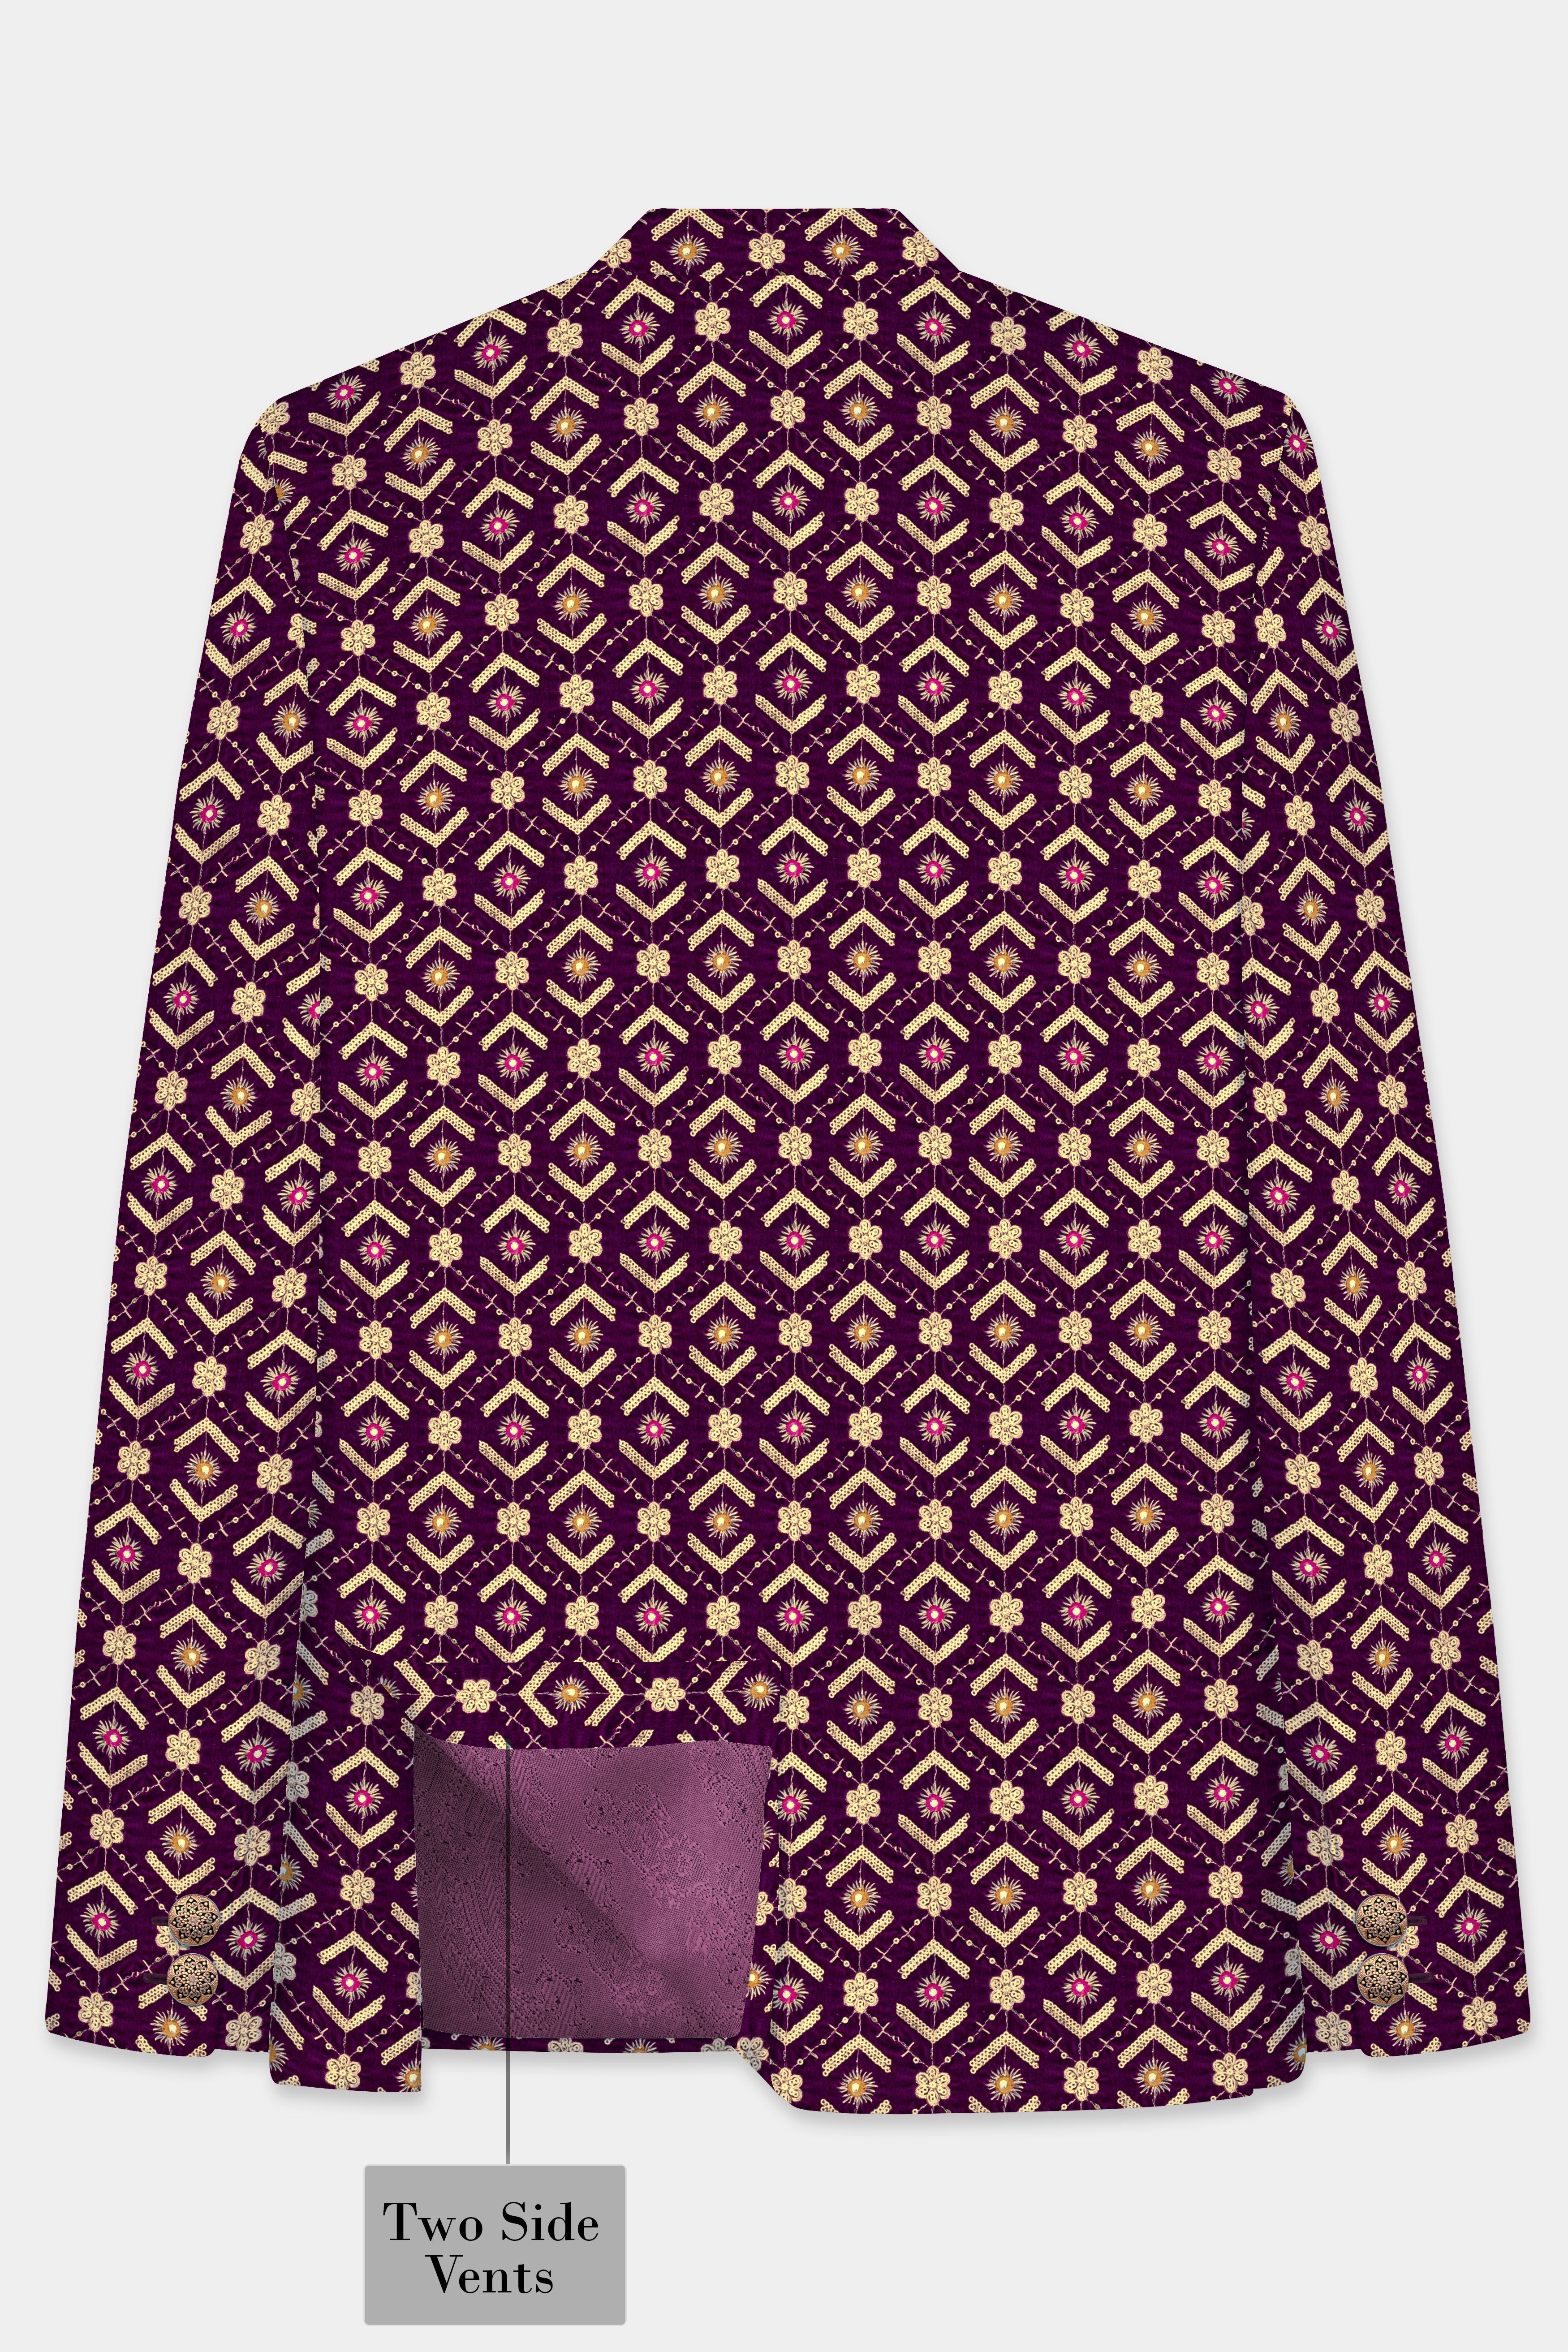 Blackberry Purple Velvet Thread And Sequin Embroidered Bandhgala Jodhpuri